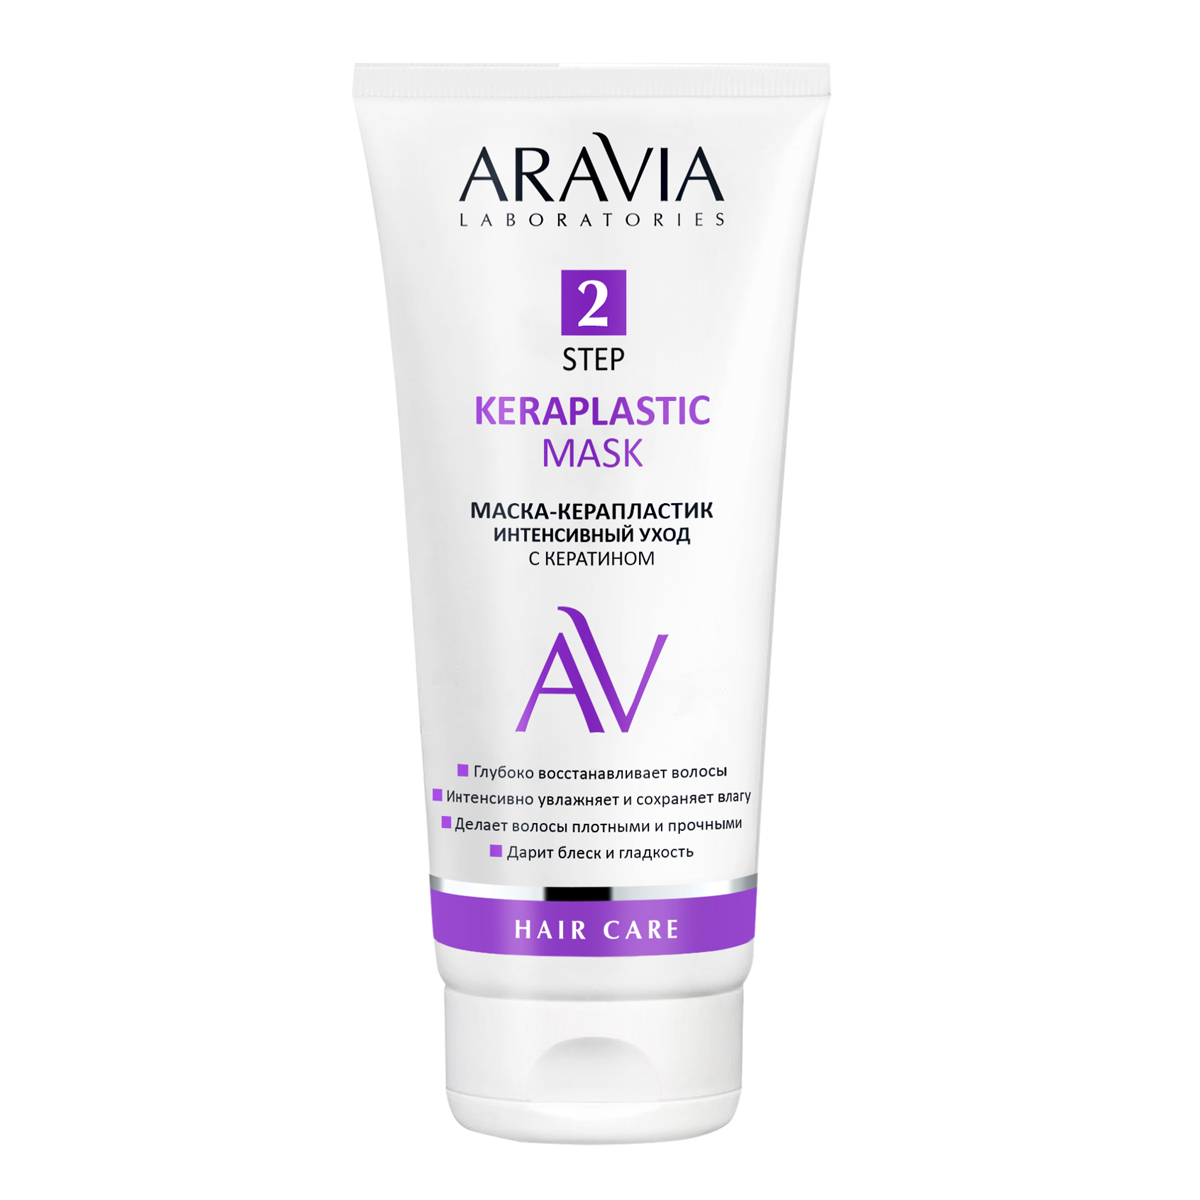 Aravia Laboratories Маска-керапластик интенсивный уход с кератином Keraplastic Mask, 200 мл (Aravia Laboratories, Уход за волосами) цена и фото